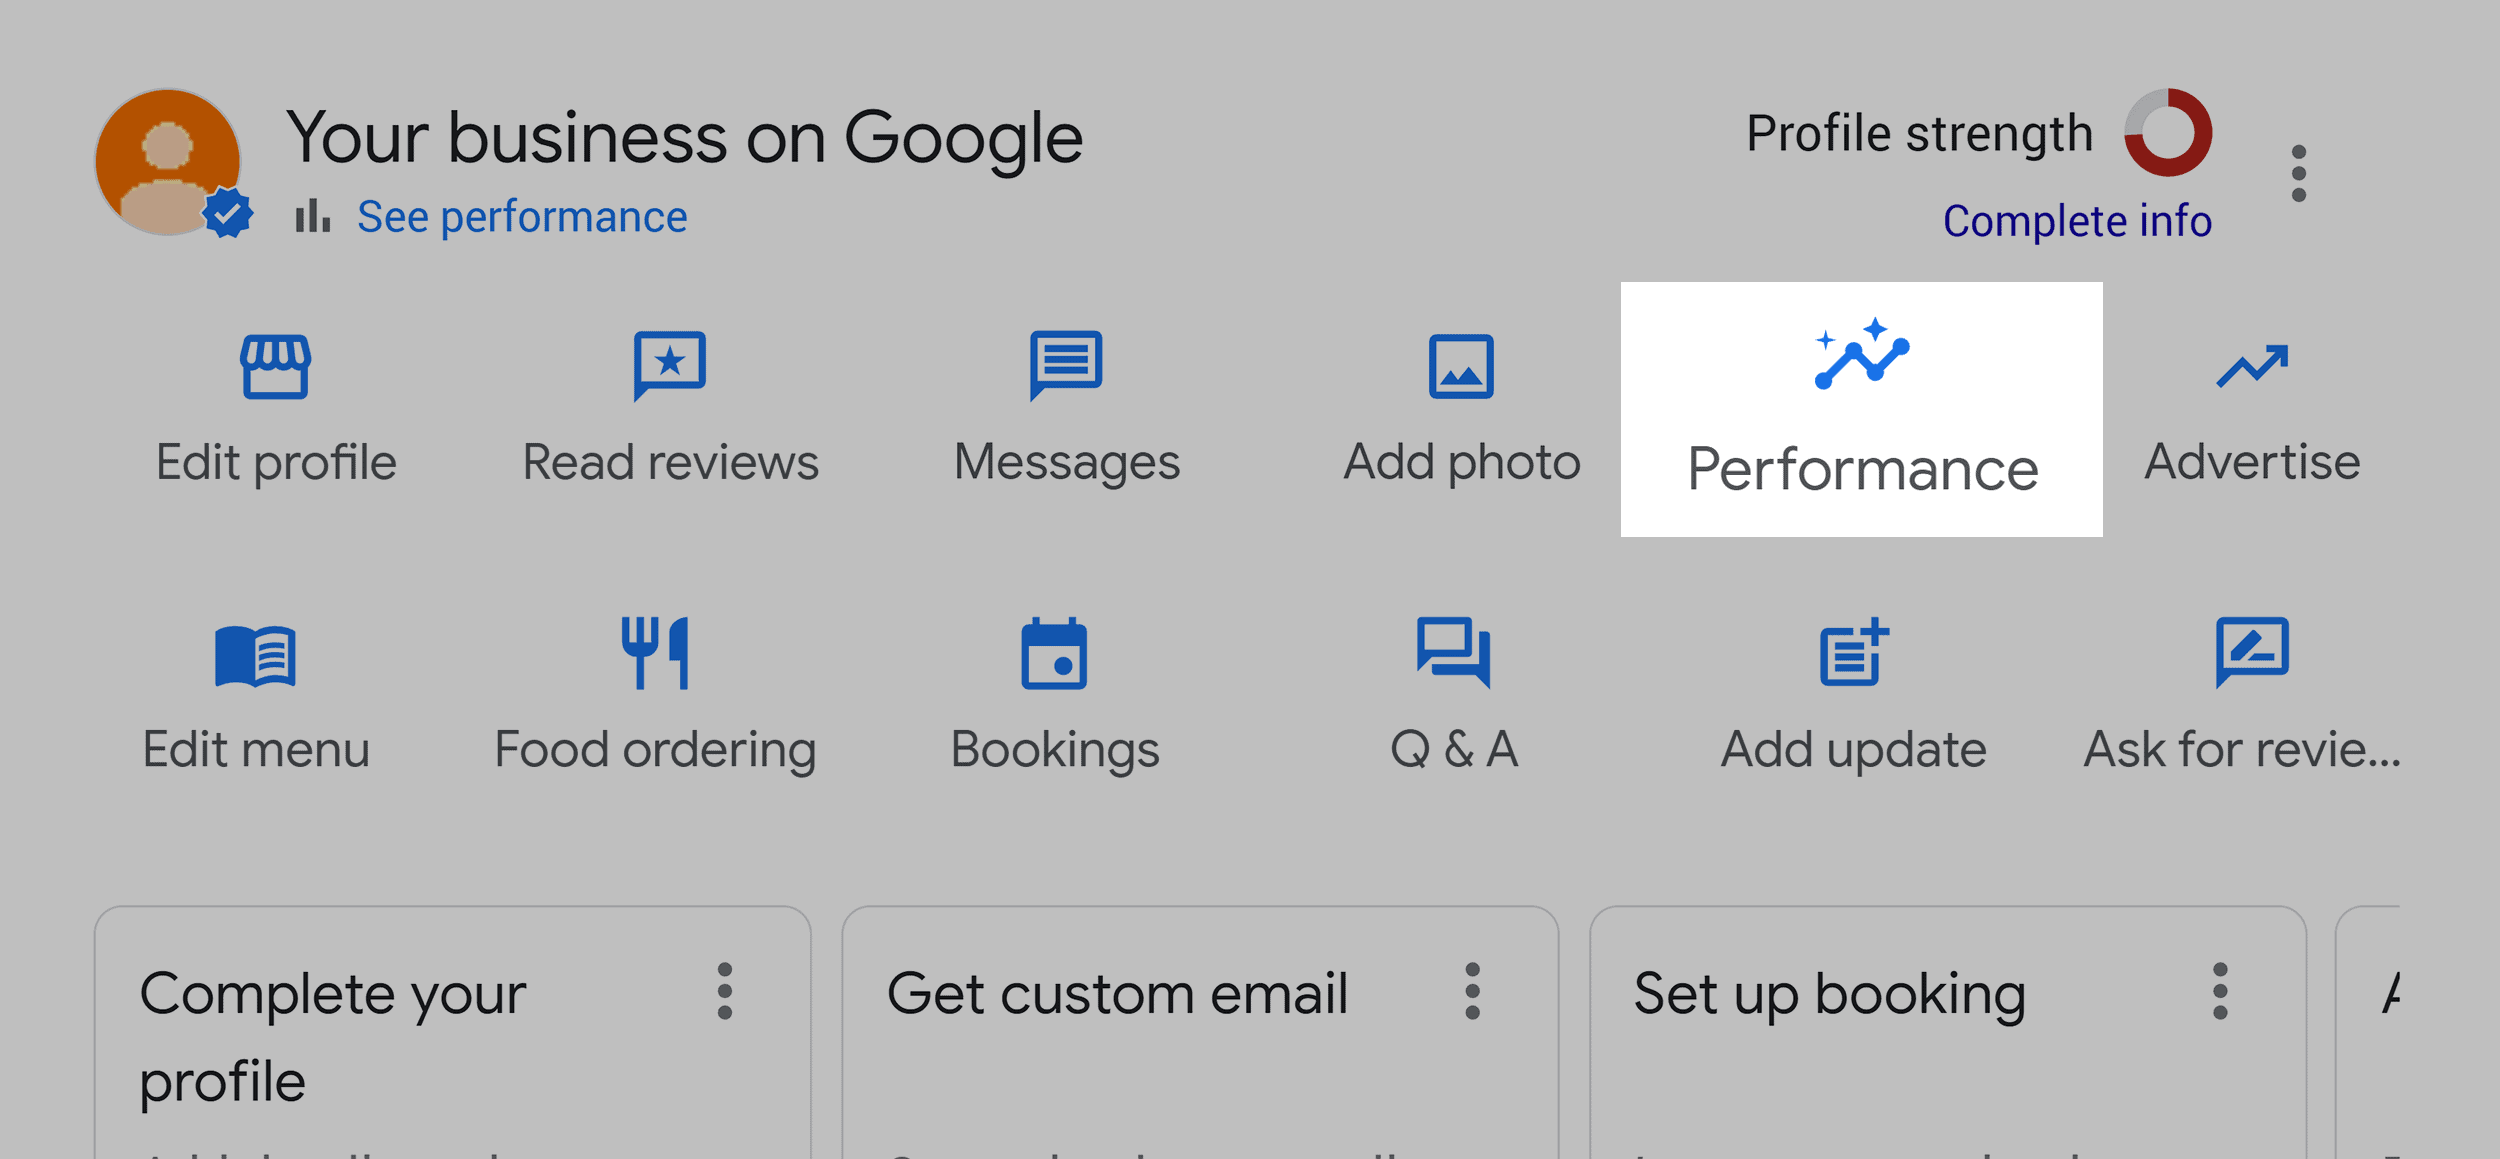 Google Business – Performance